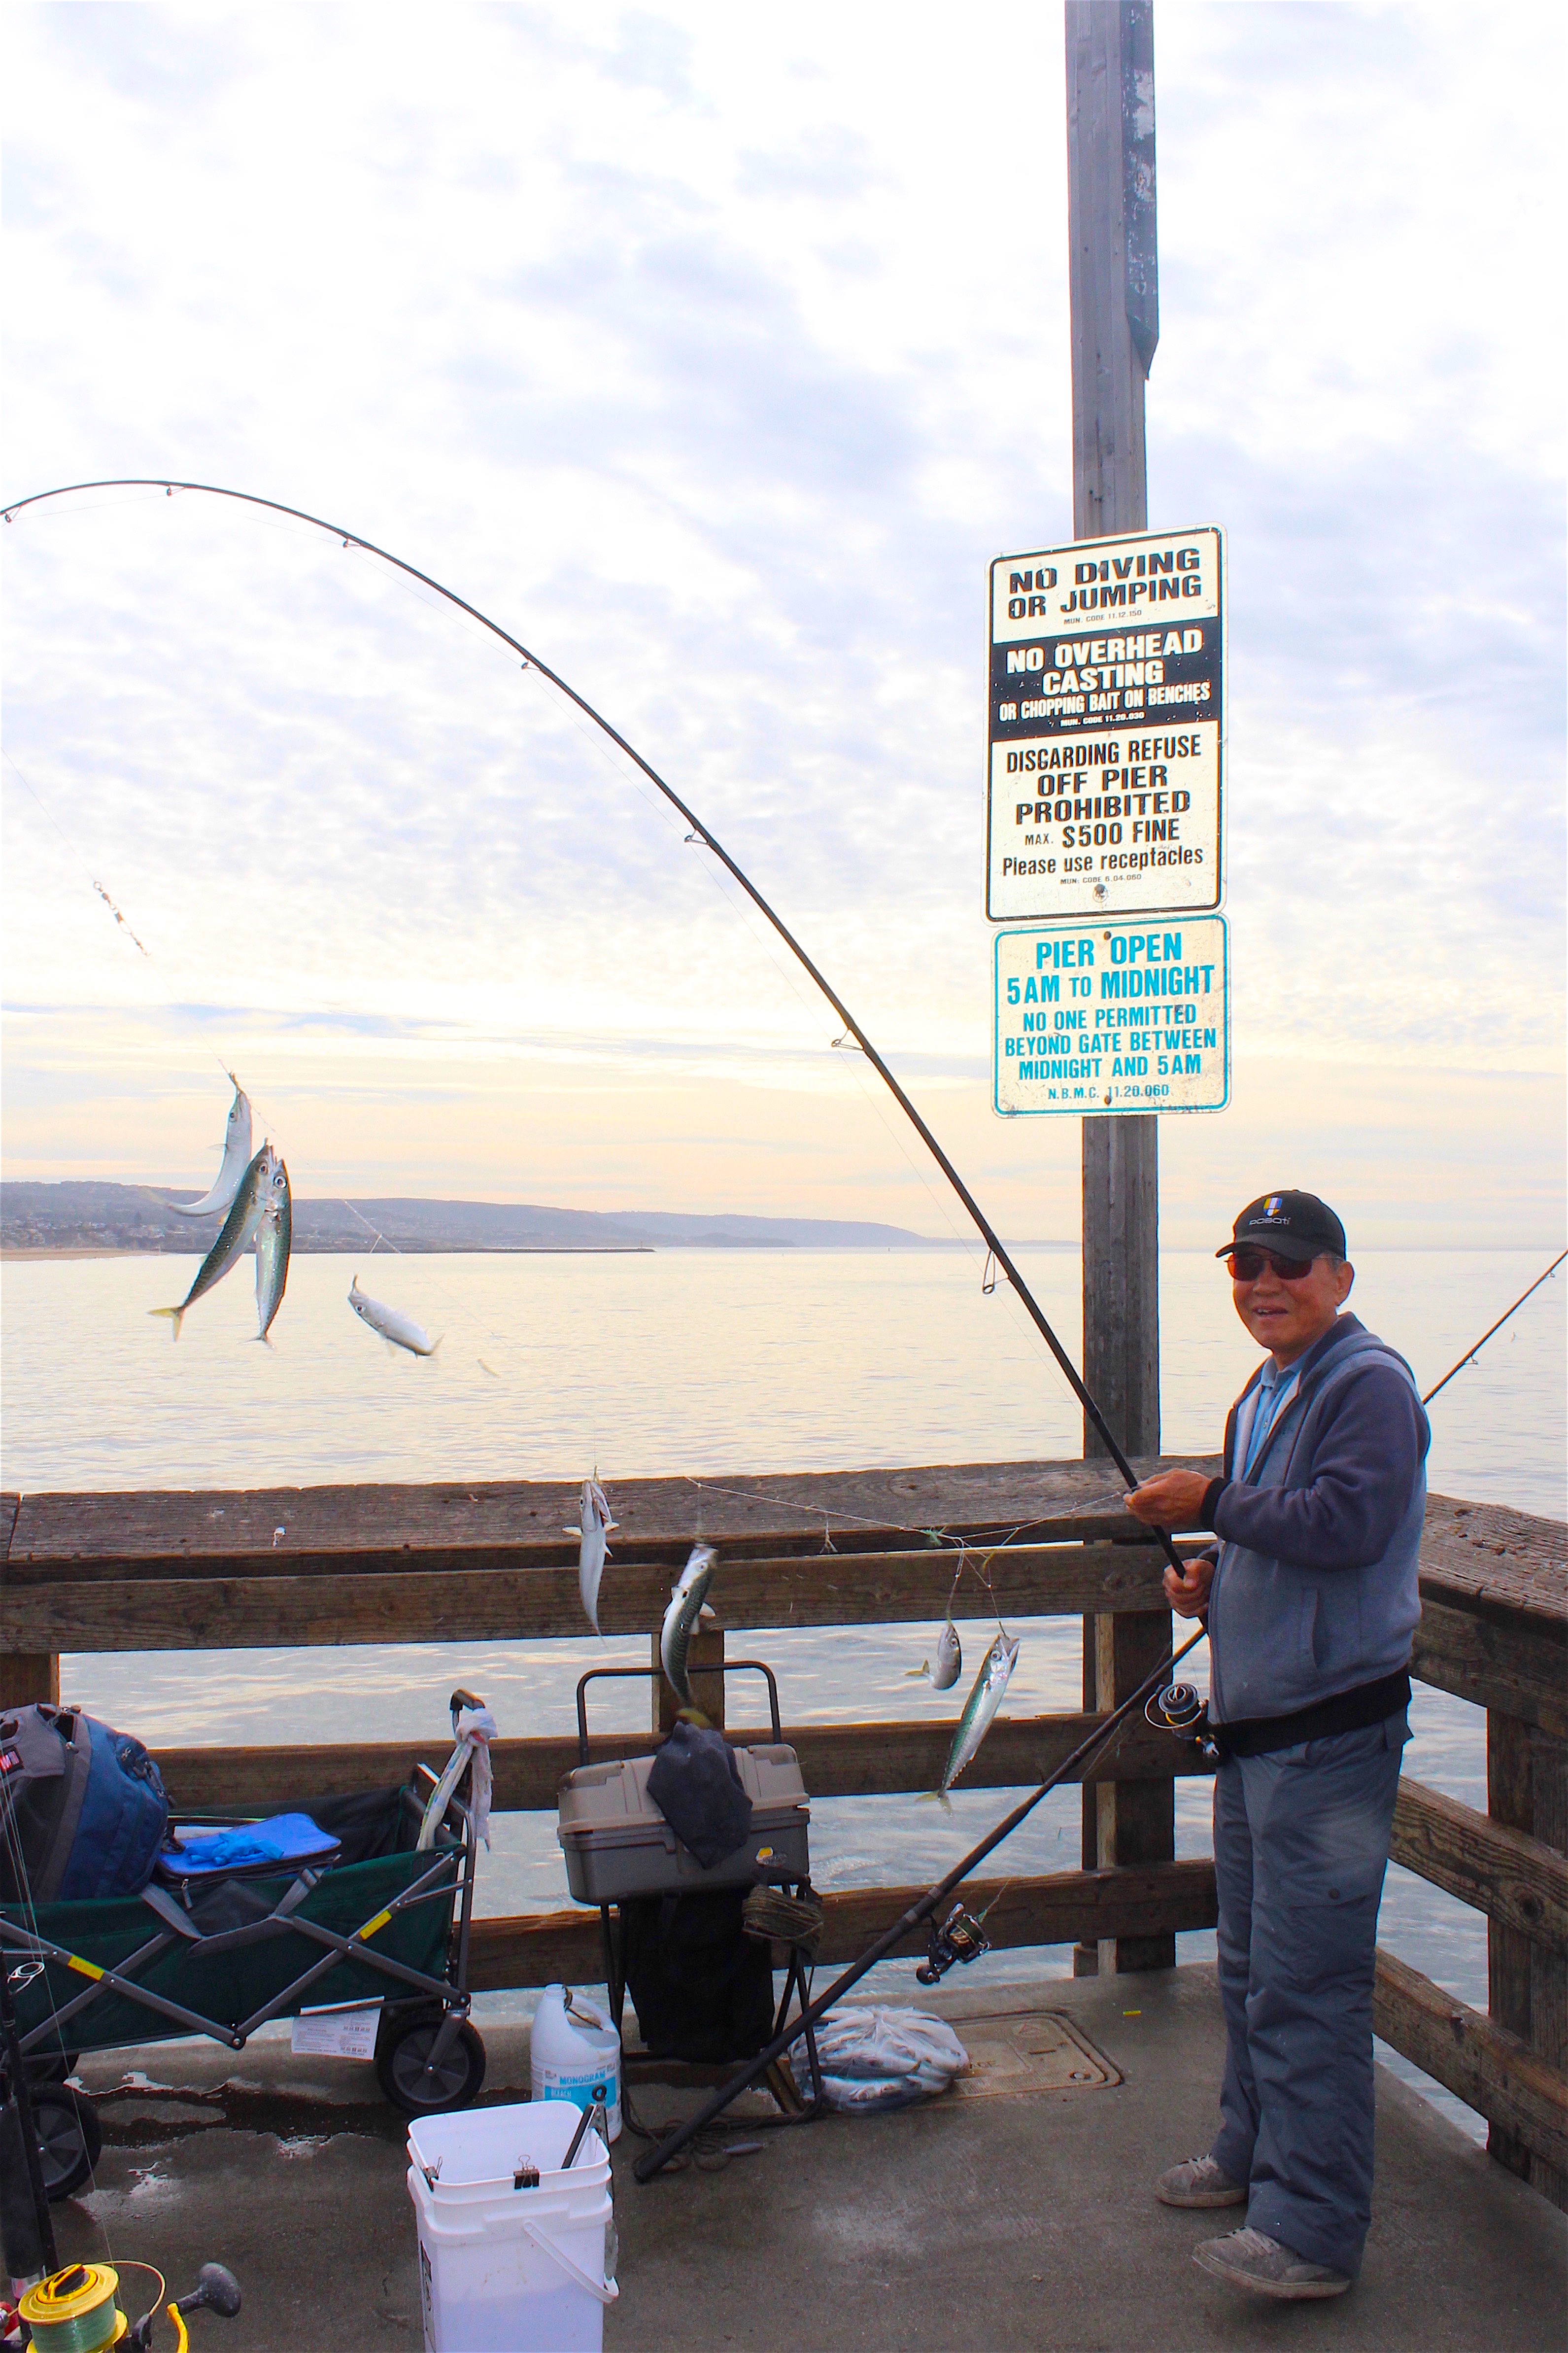 Balboa Pier - Page 3 of 14 - Pier Fishing in California